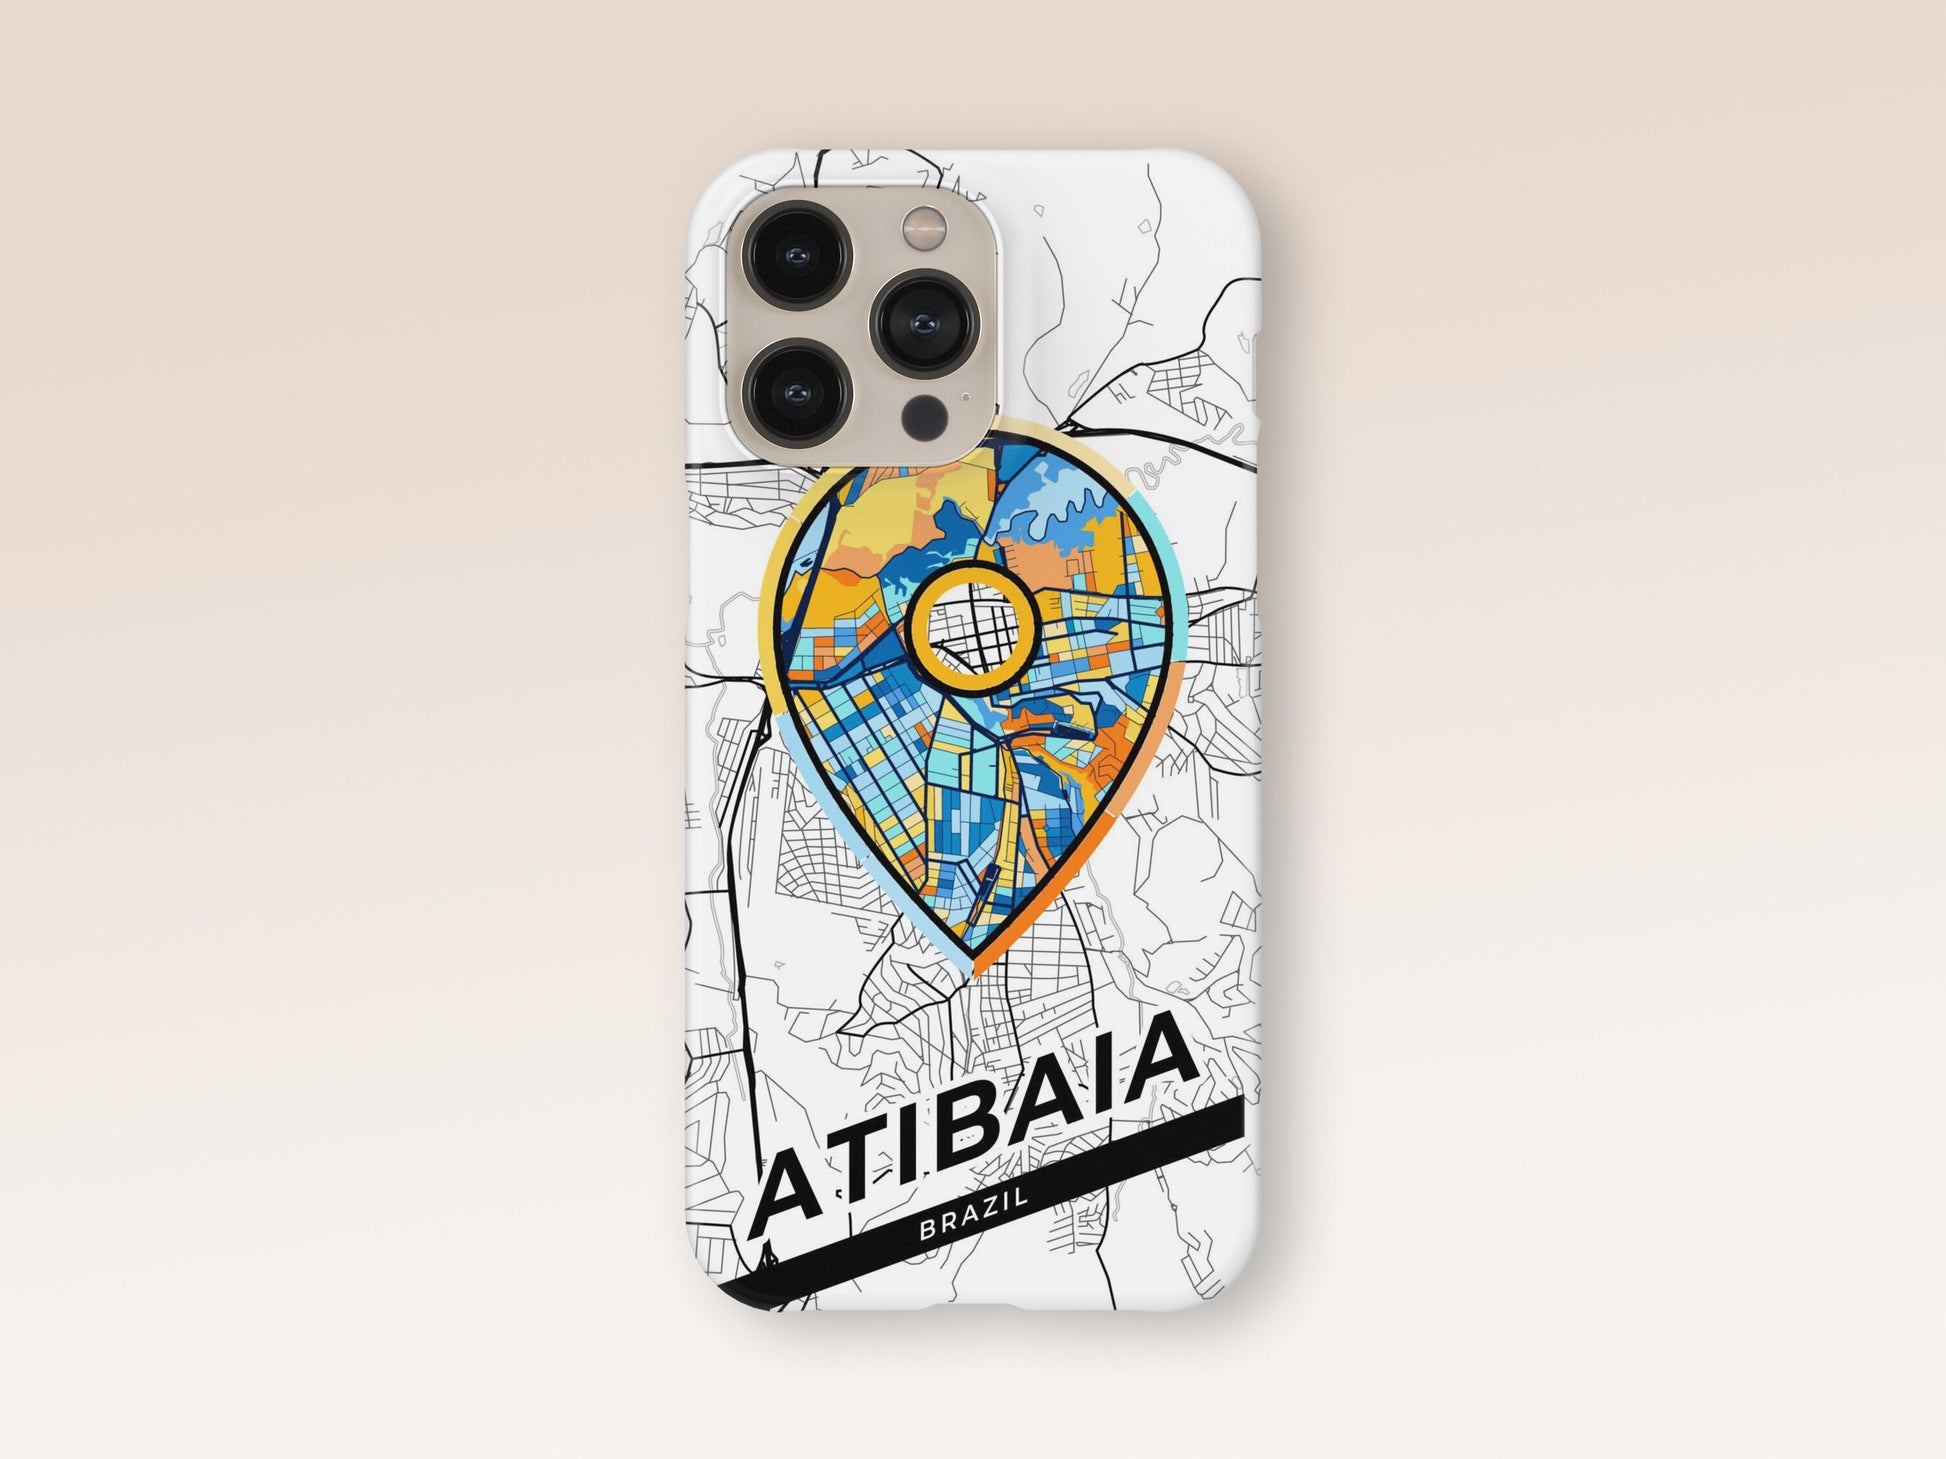 Atibaia Brazil slim phone case with colorful icon. Birthday, wedding or housewarming gift. Couple match cases. 1